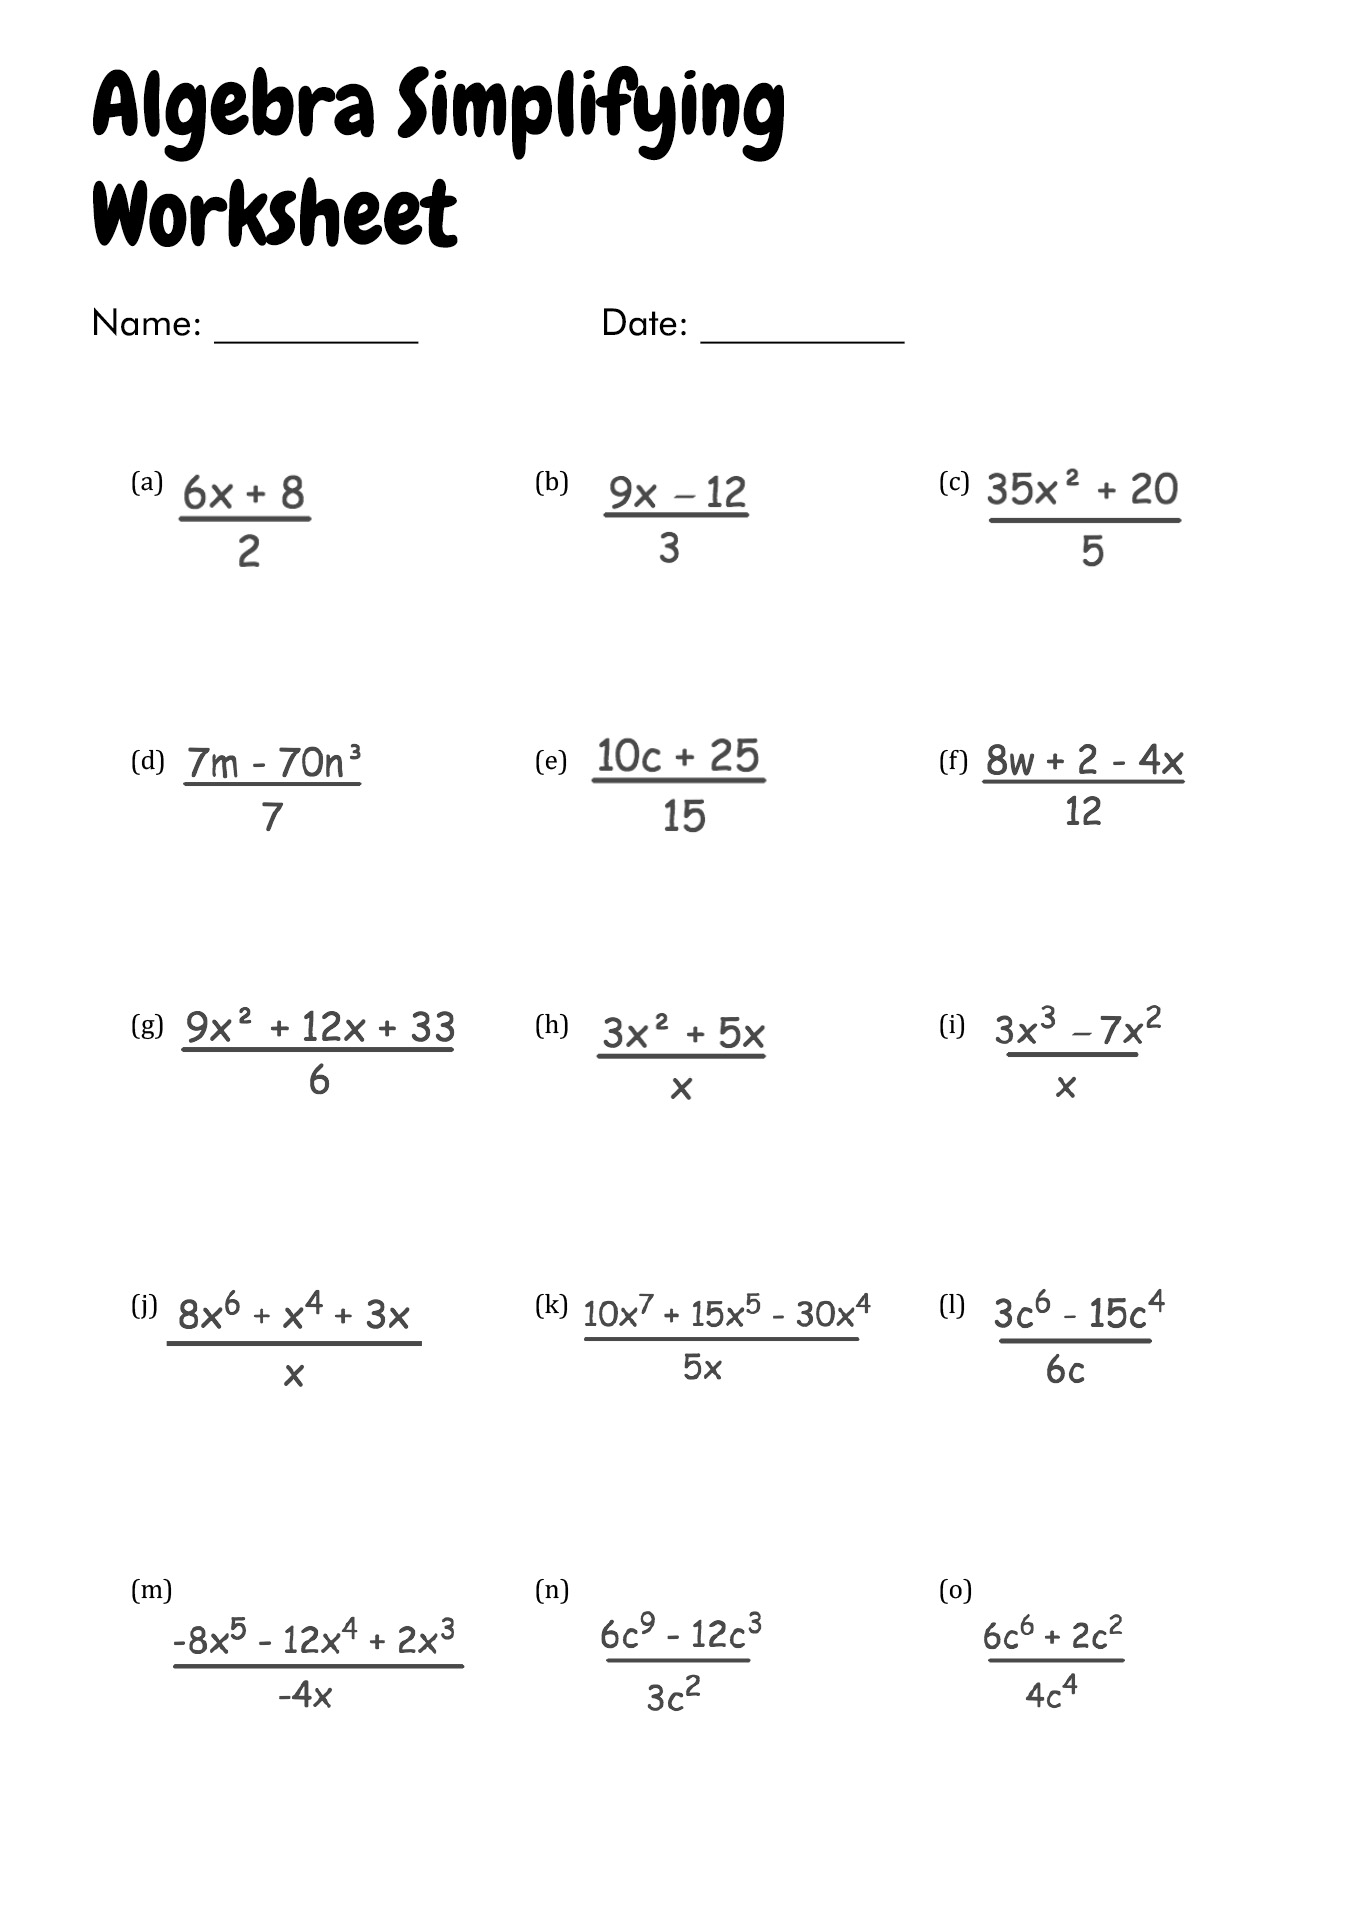 Simplifying Algebra Worksheets Free Pdf At Worksheeto Com